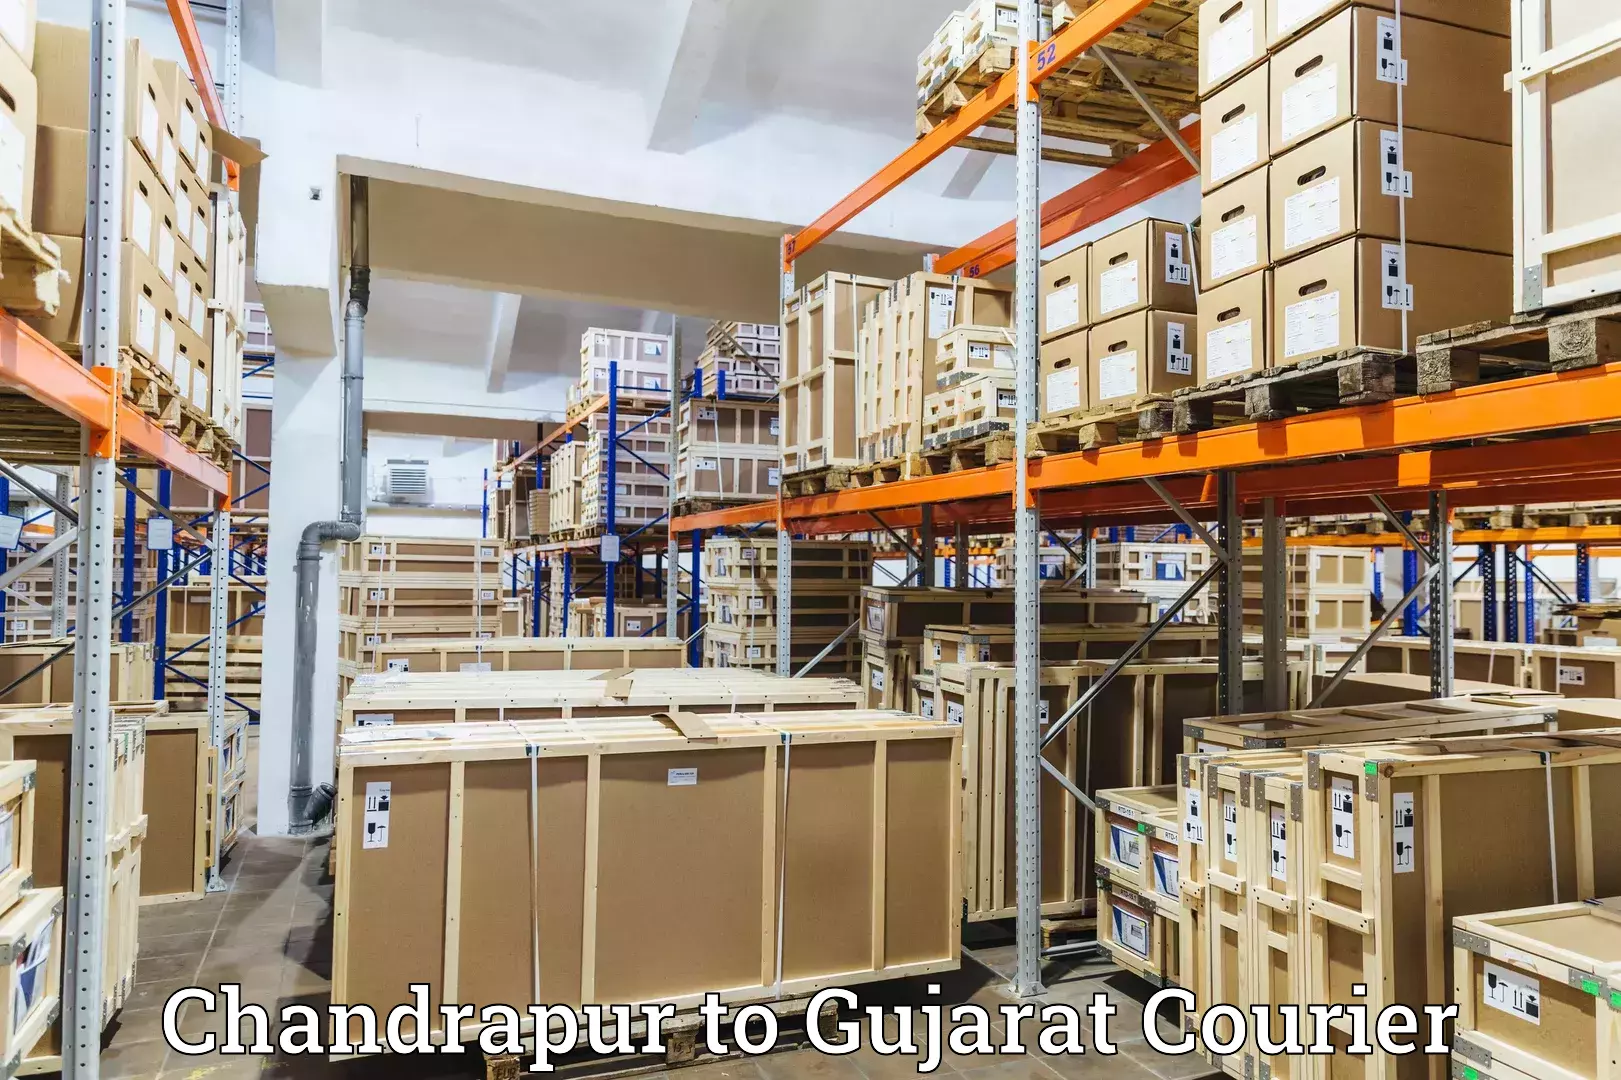 Supply chain efficiency Chandrapur to Lunawada